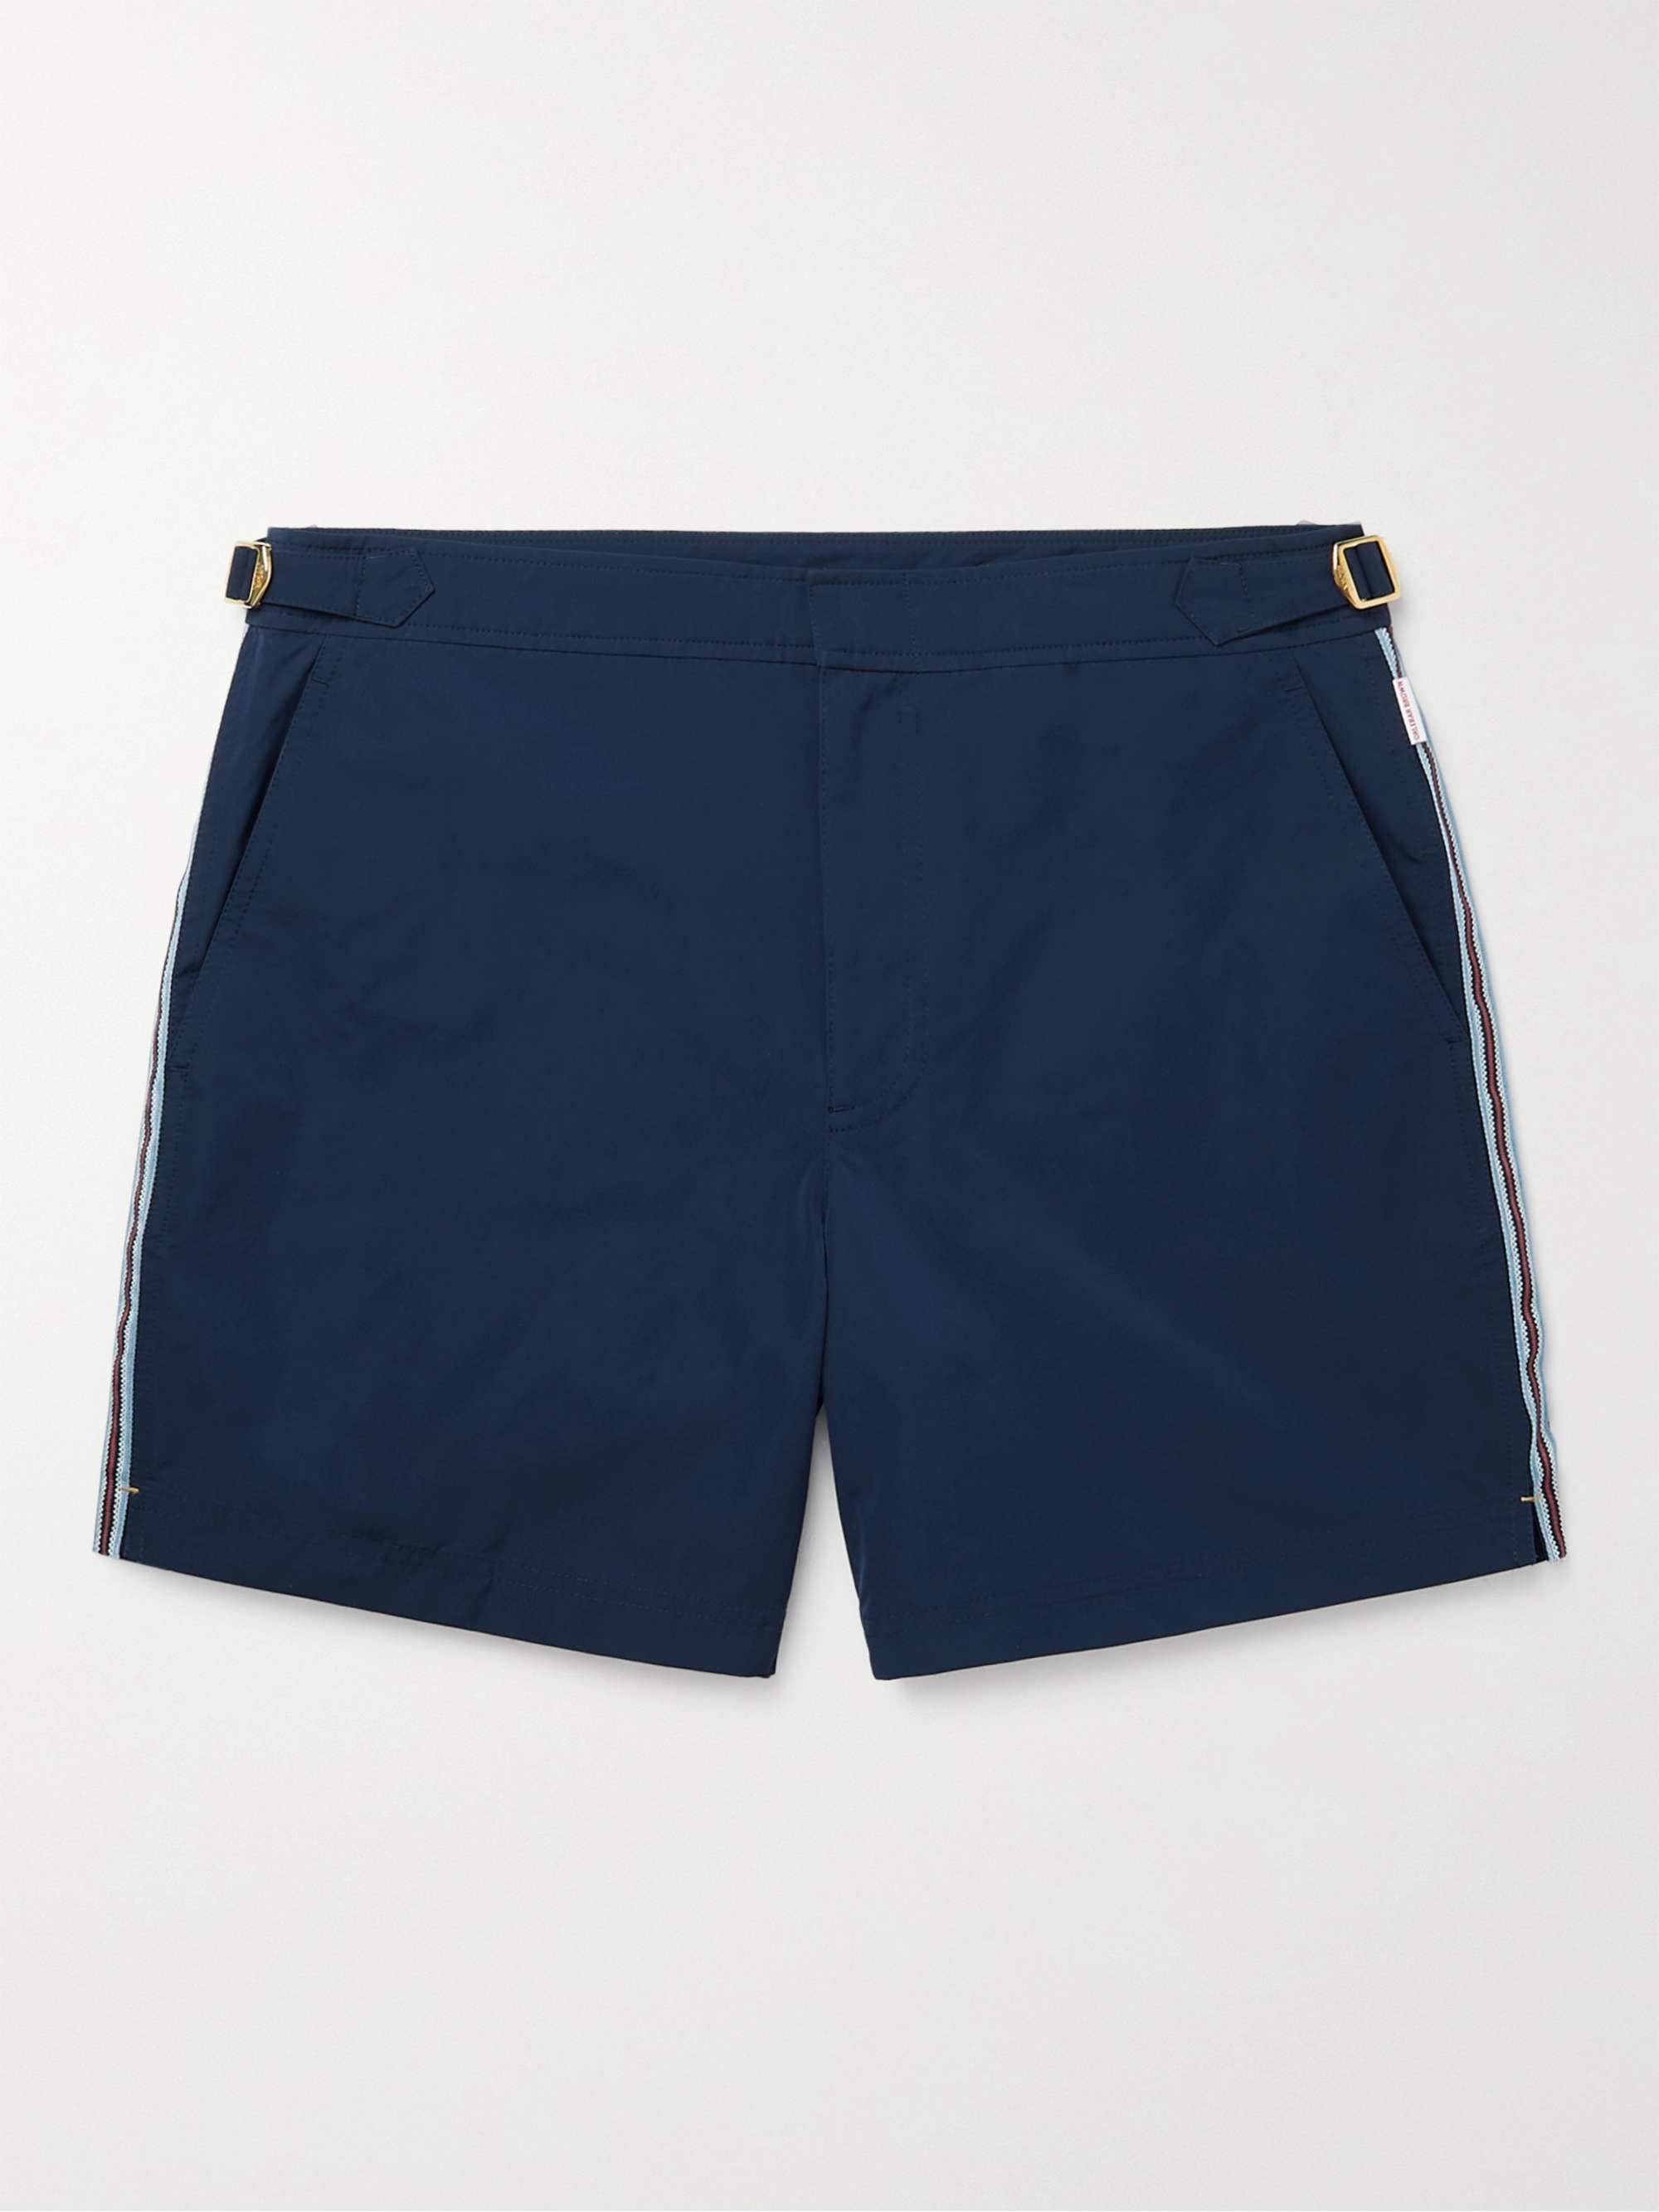 Orlebar Brown Synthetic Setter Bluestone Shorter-length Swim Shorts for Men Mens Clothing Beachwear Boardshorts and swim shorts 